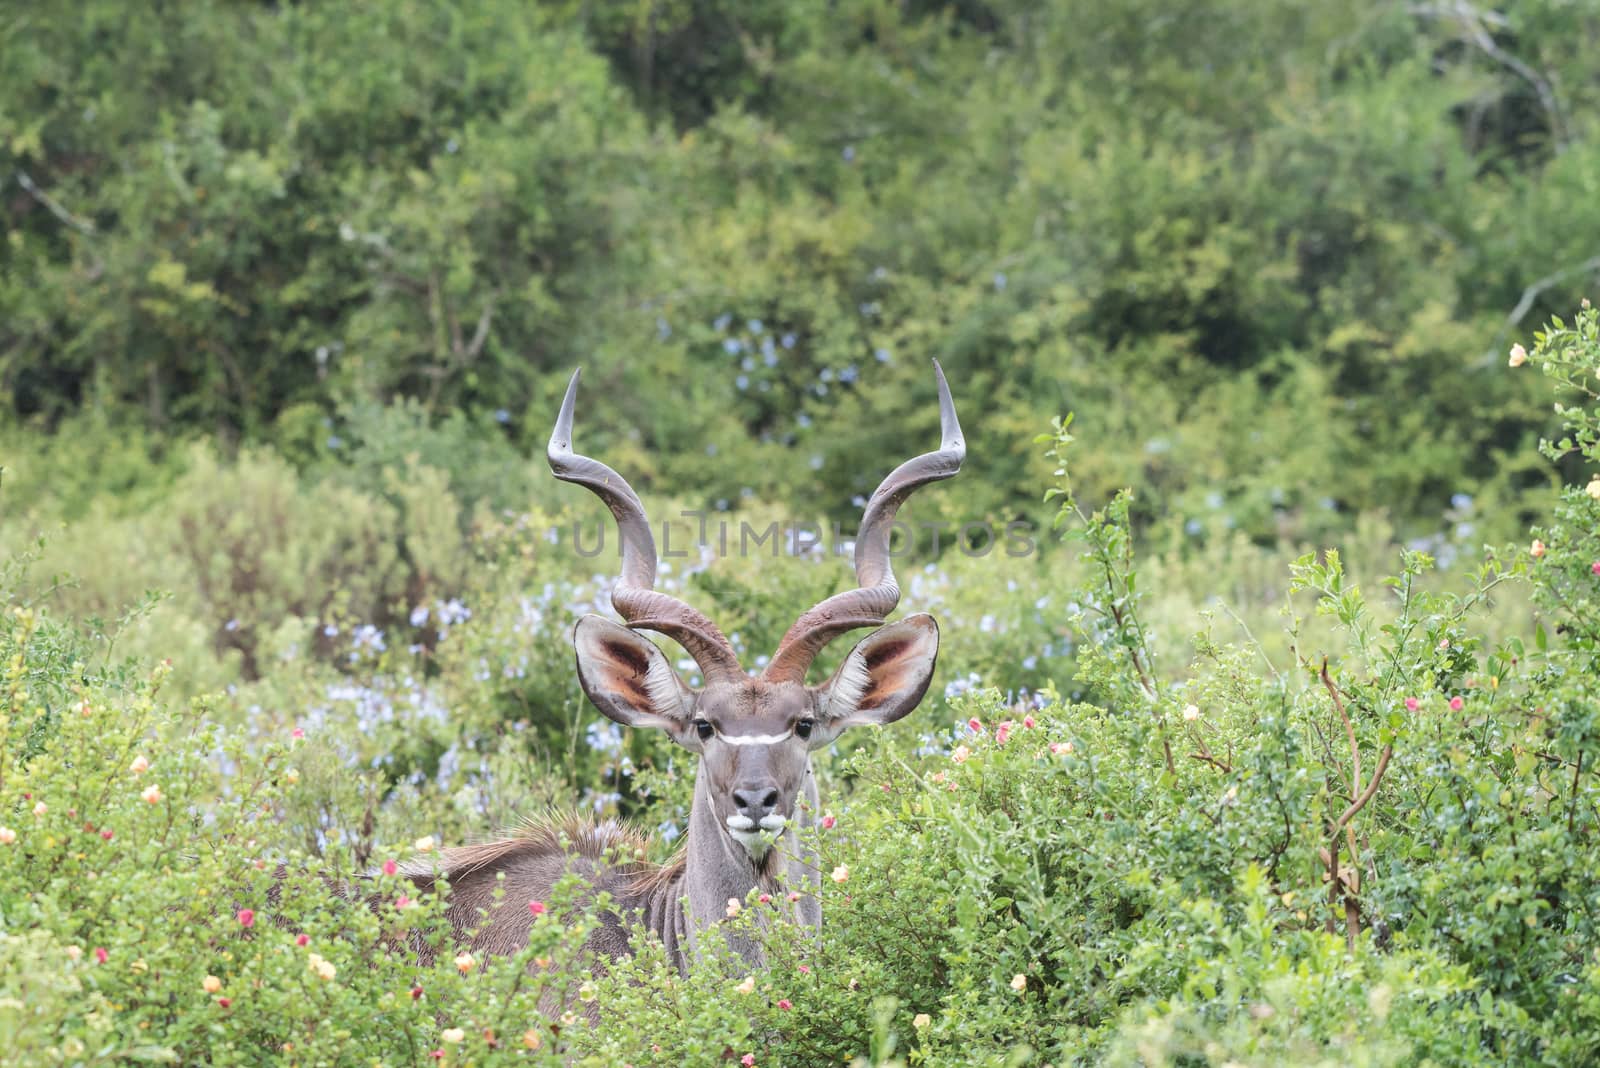 A large greater kudu bull, Tragelaphus strepsiceros, hiding between shrubs